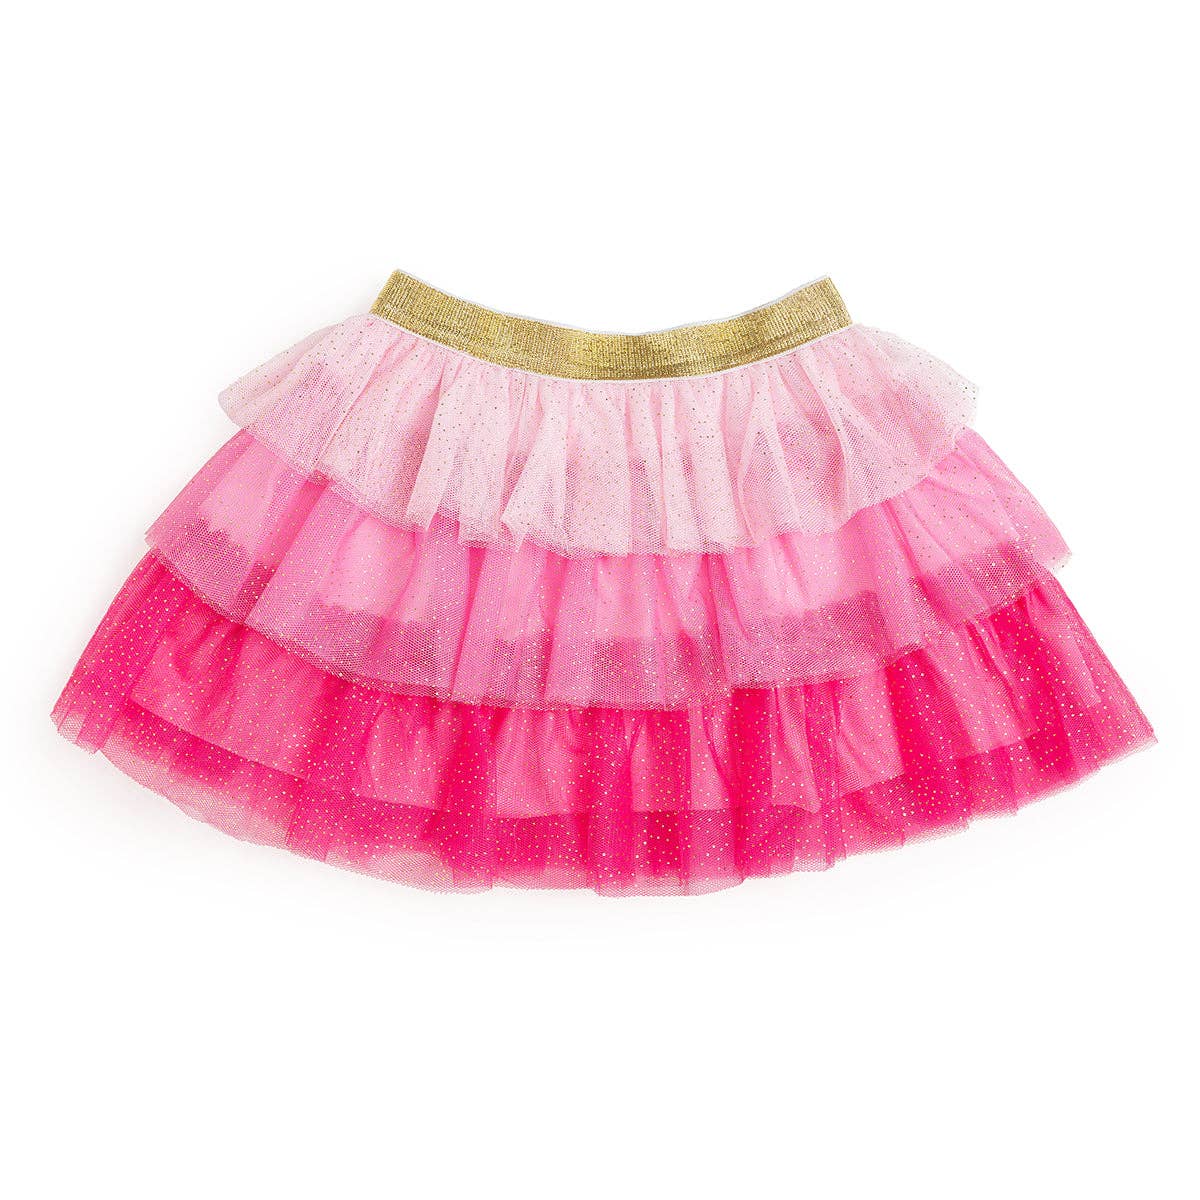 Sweet Wink - Pink Petal Tutu - Dress Up Skirt - Kids Valentine's Day Tutu